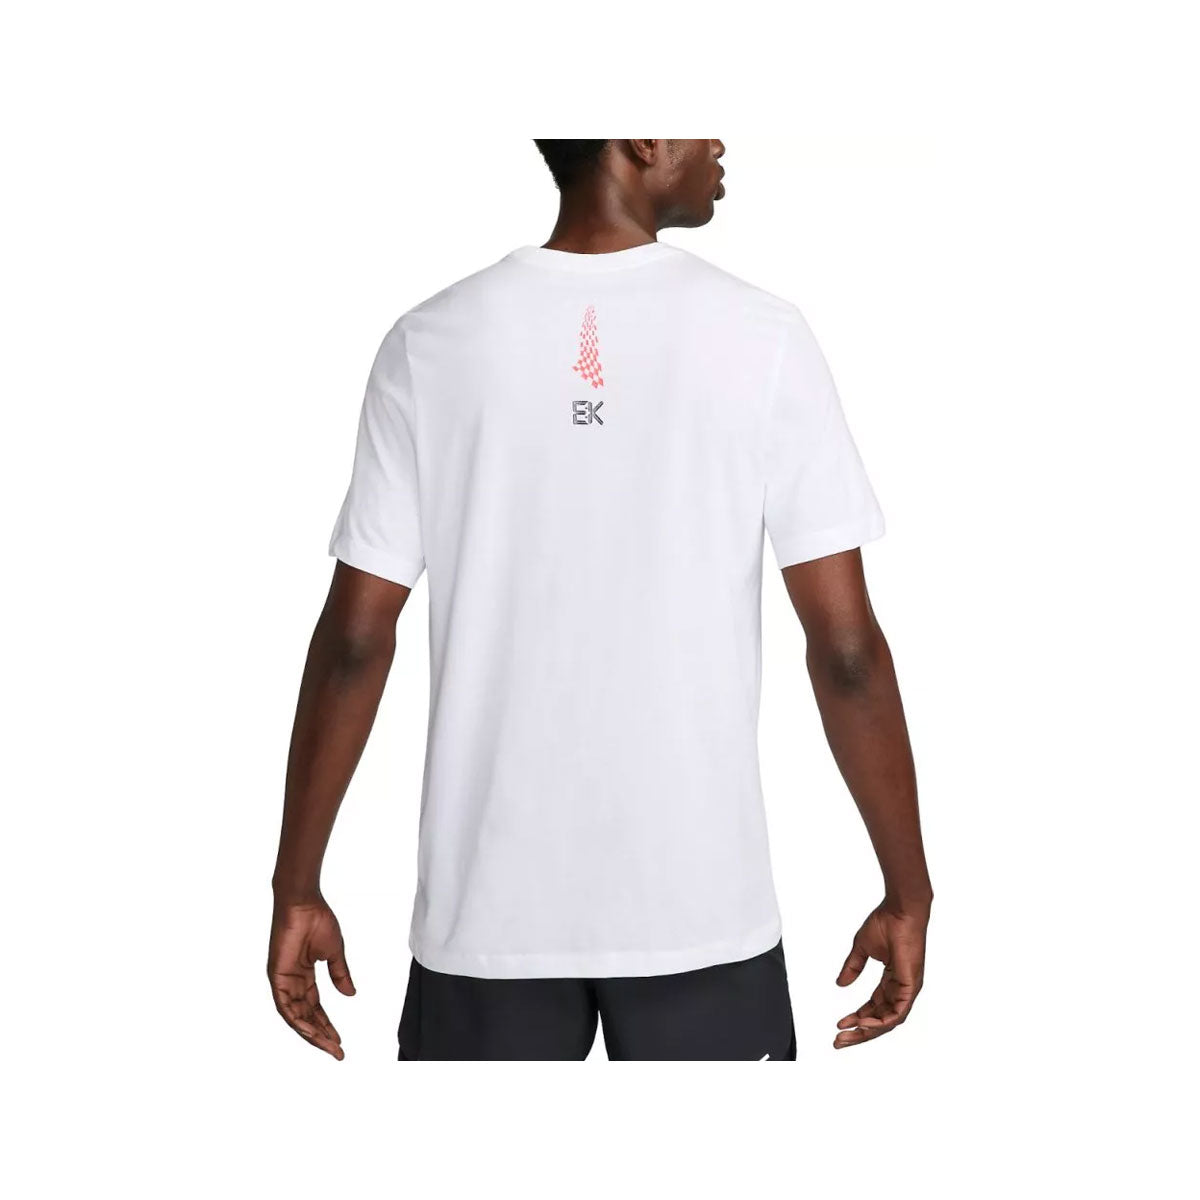 Nike Men's Dri-FIT Running T-Shirt